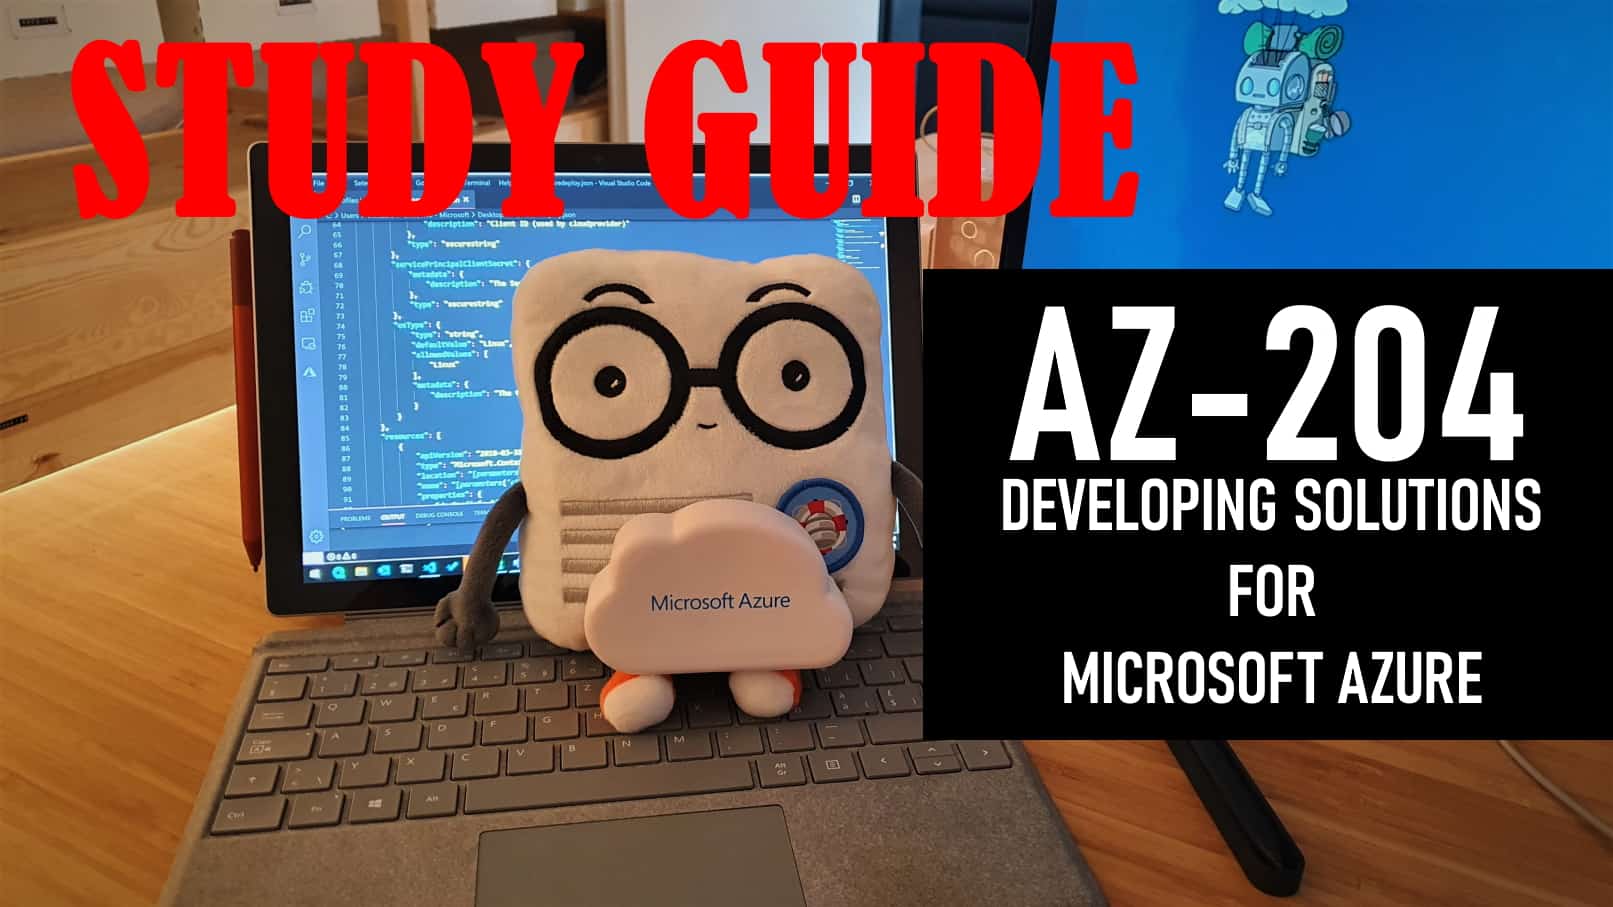 AZ-204 Developing Solutions for Microsoft Azure Exam Study Guide